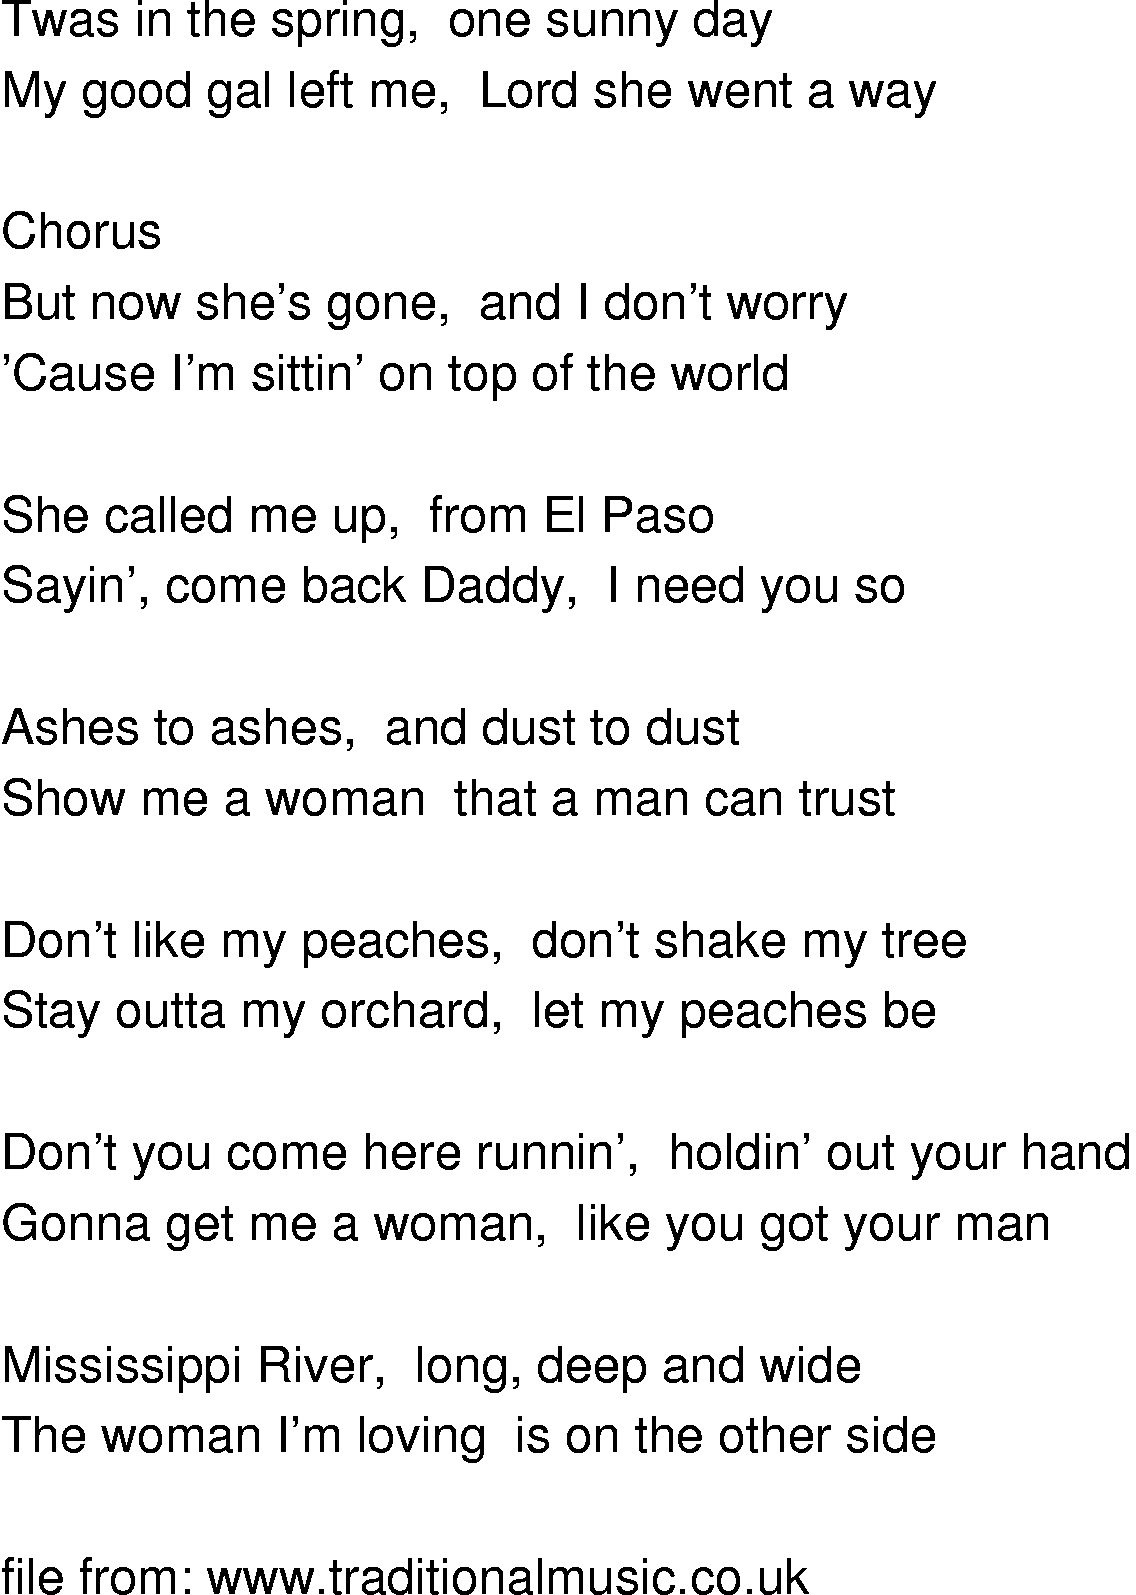 Top of The World Lyrics